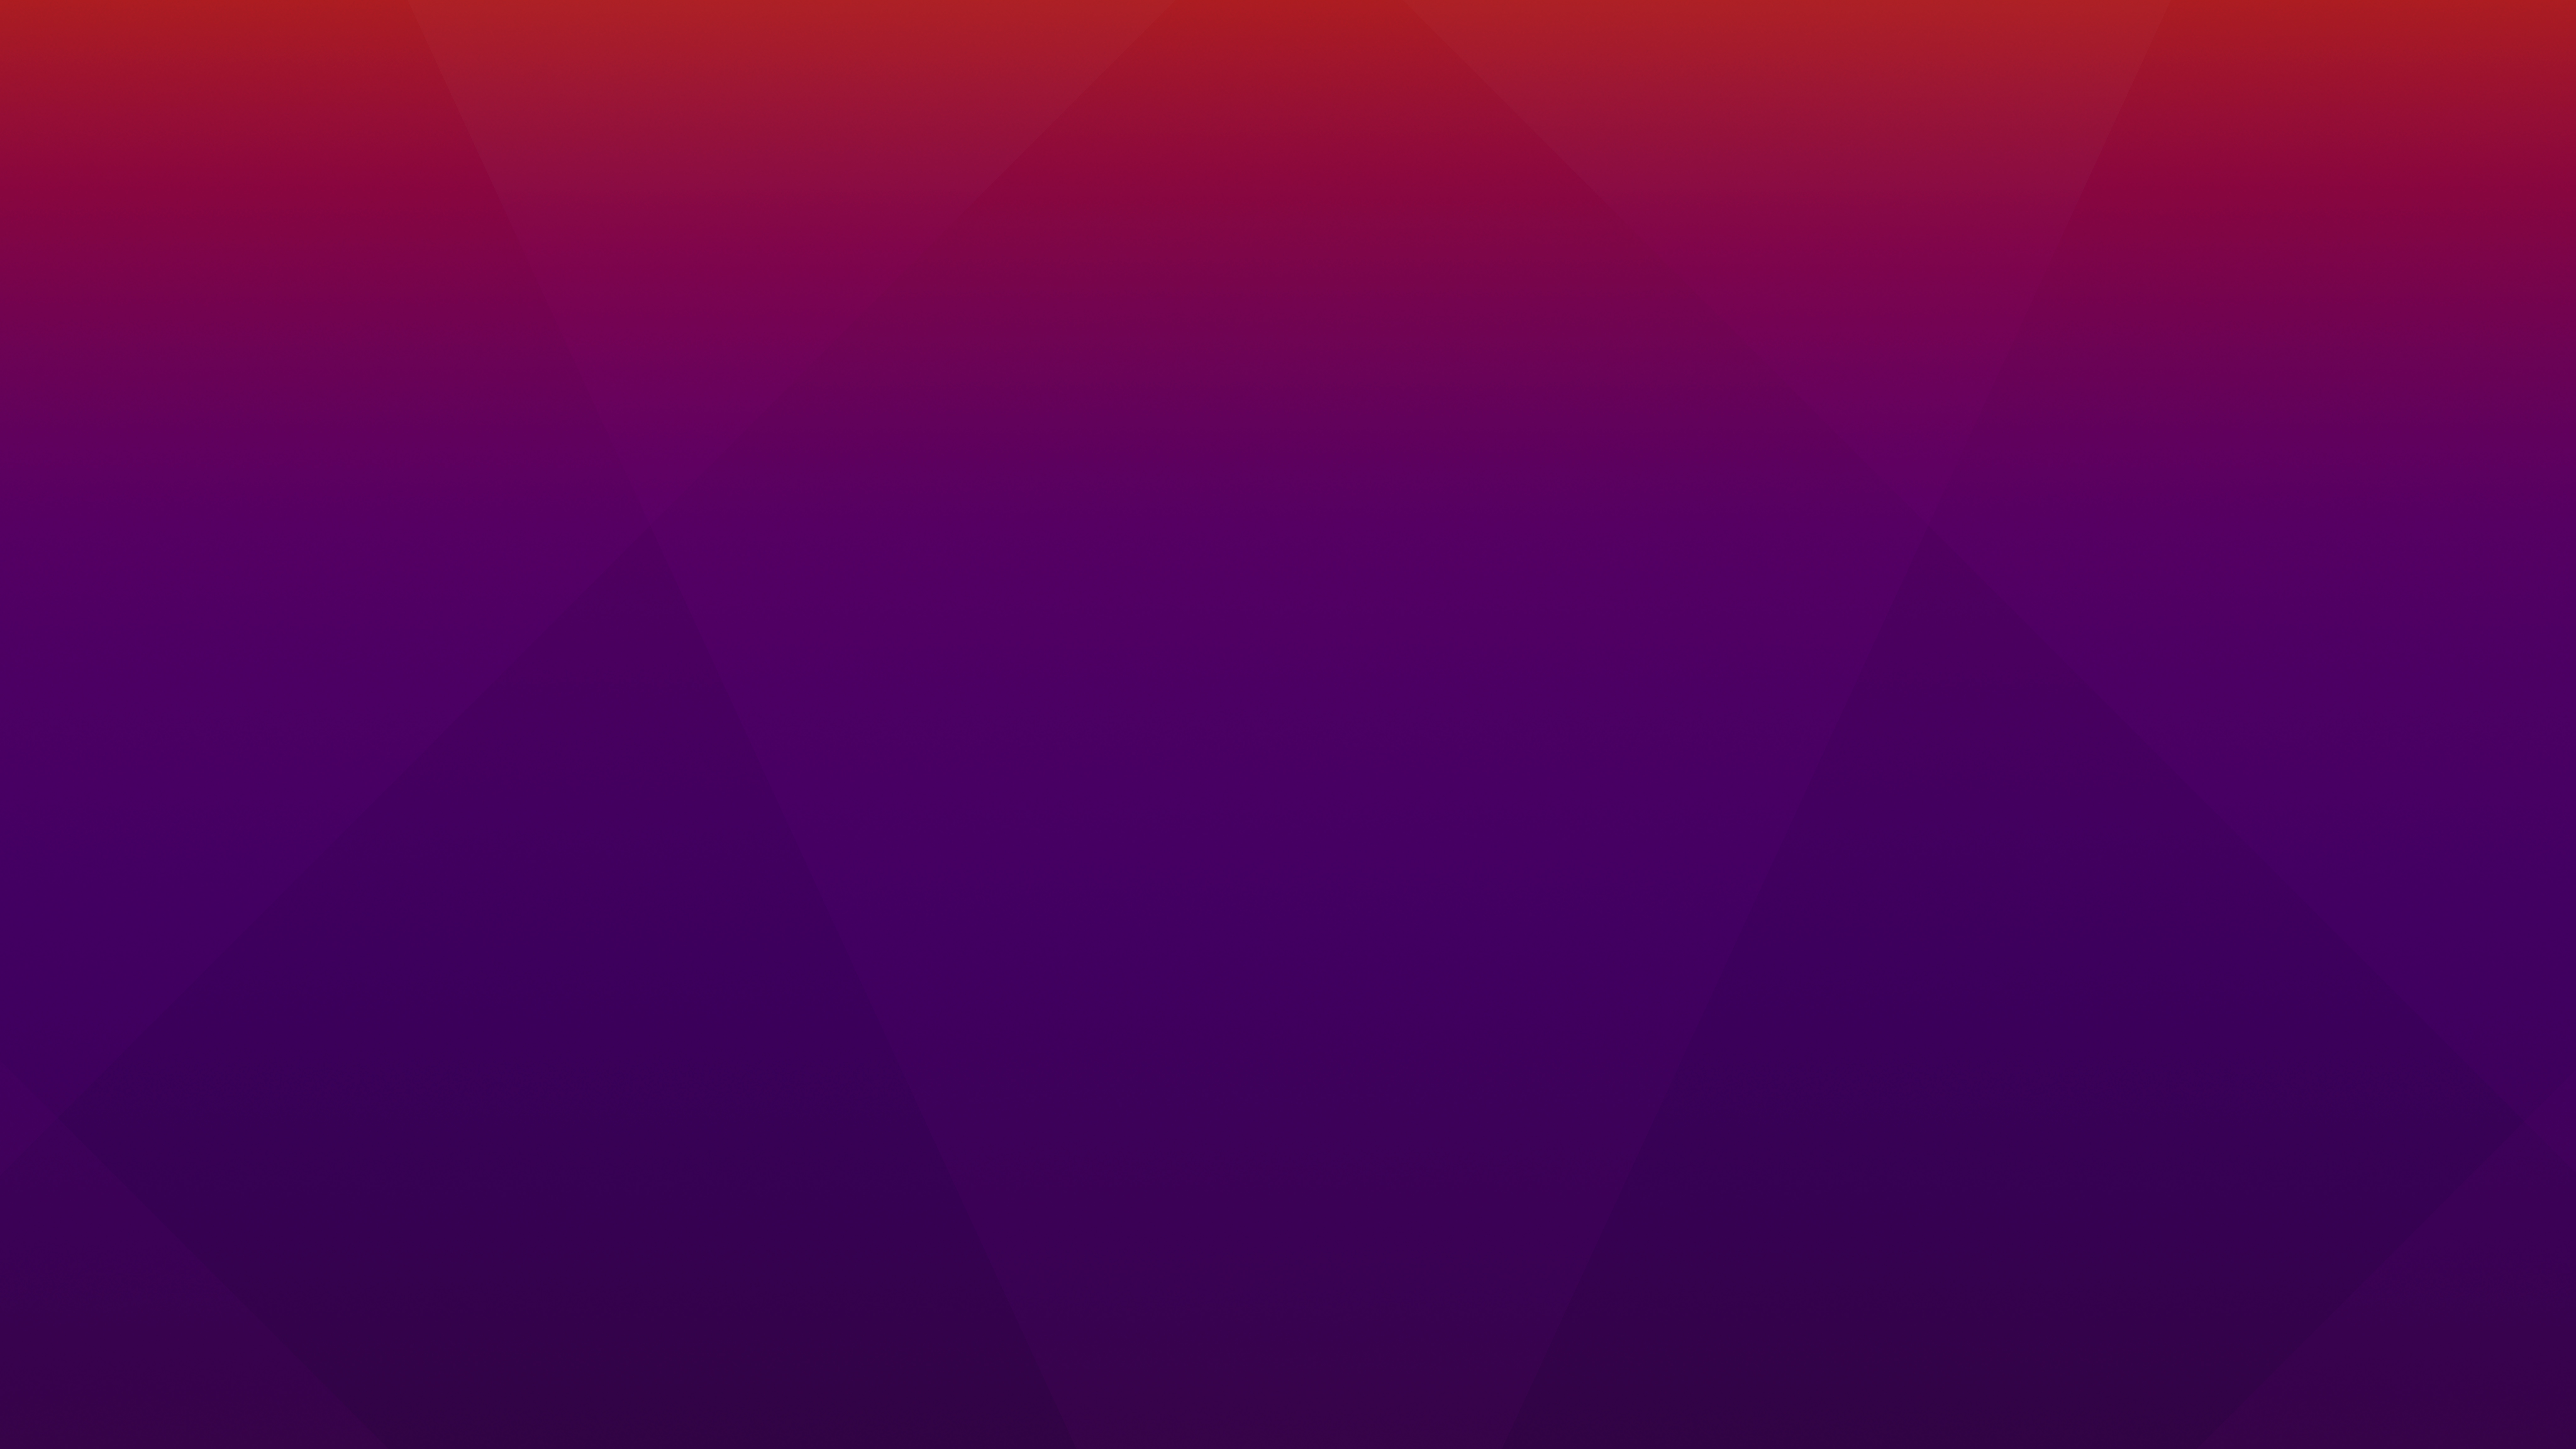 Violet Background Wallpaper 4k Ubuntu Mascot Stock 5k 8k Gradients 3790